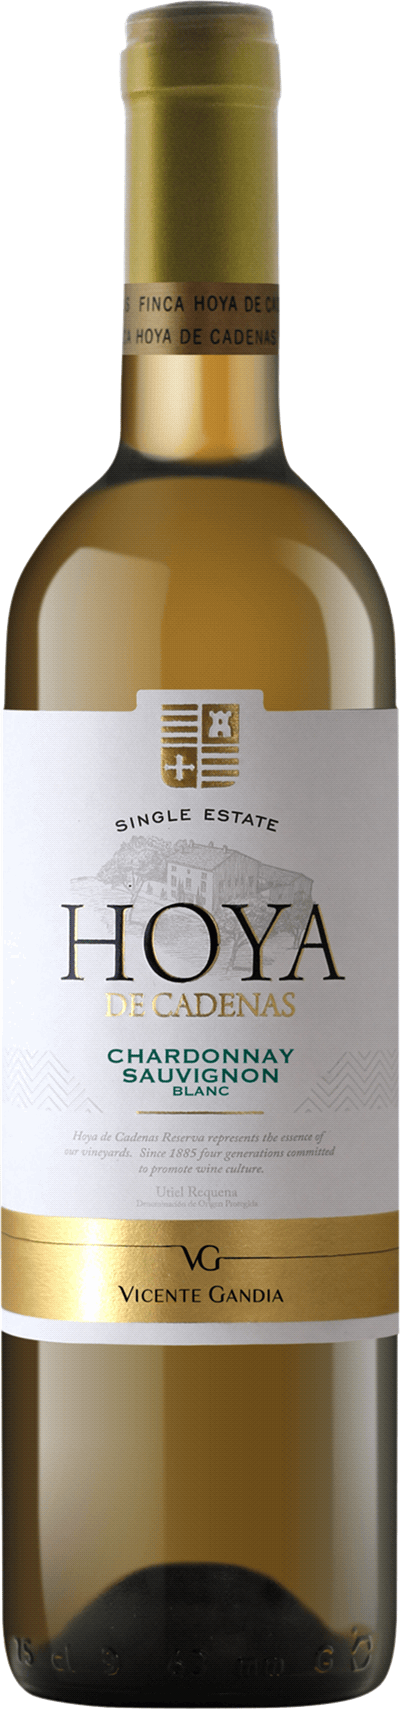 Hoya de Cadenas Chardonnay Sauvignon Blanc